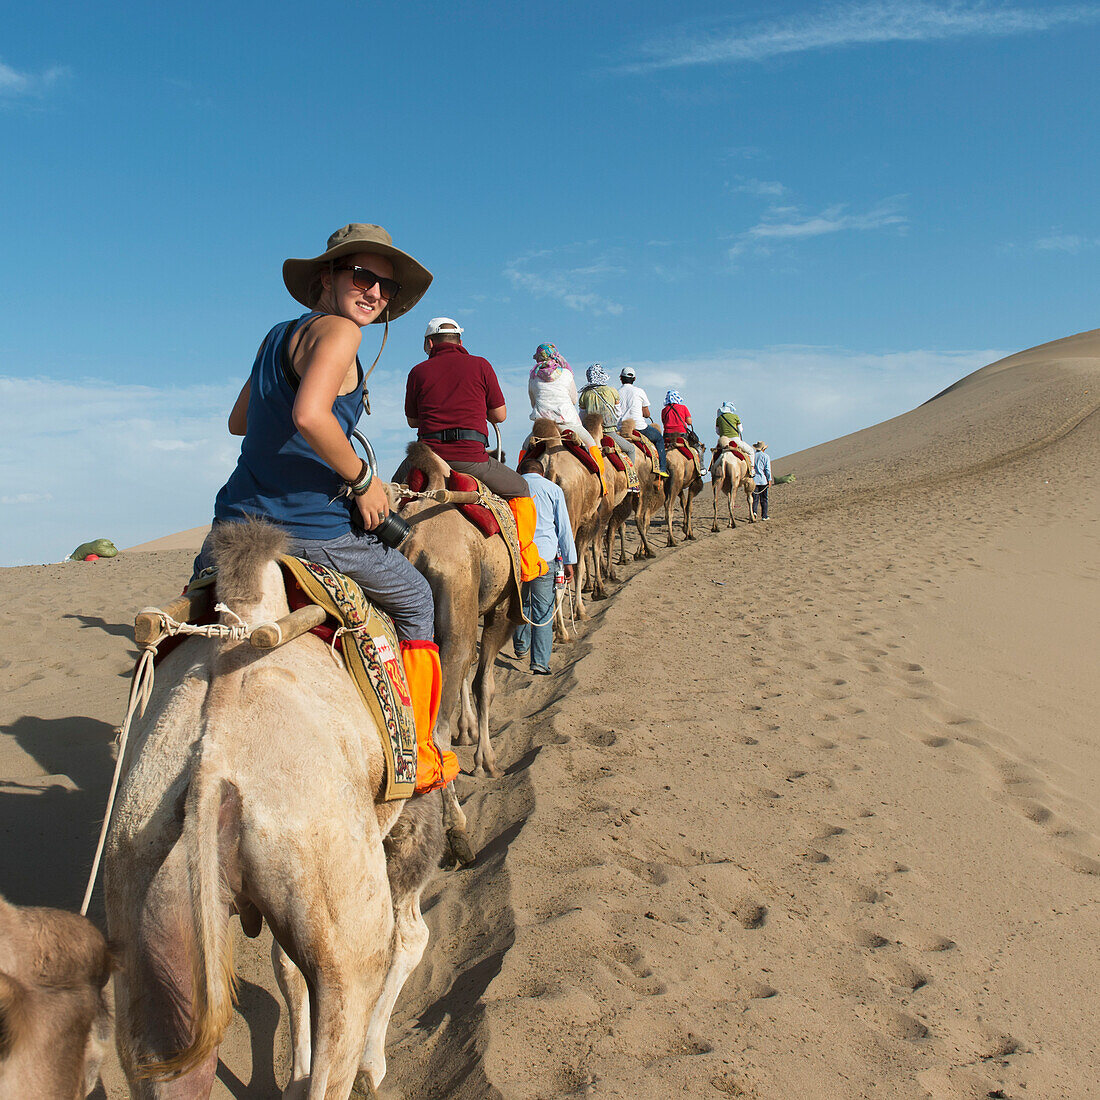 Tourists ride in a row on camels, Jiuquan, Gansu, China